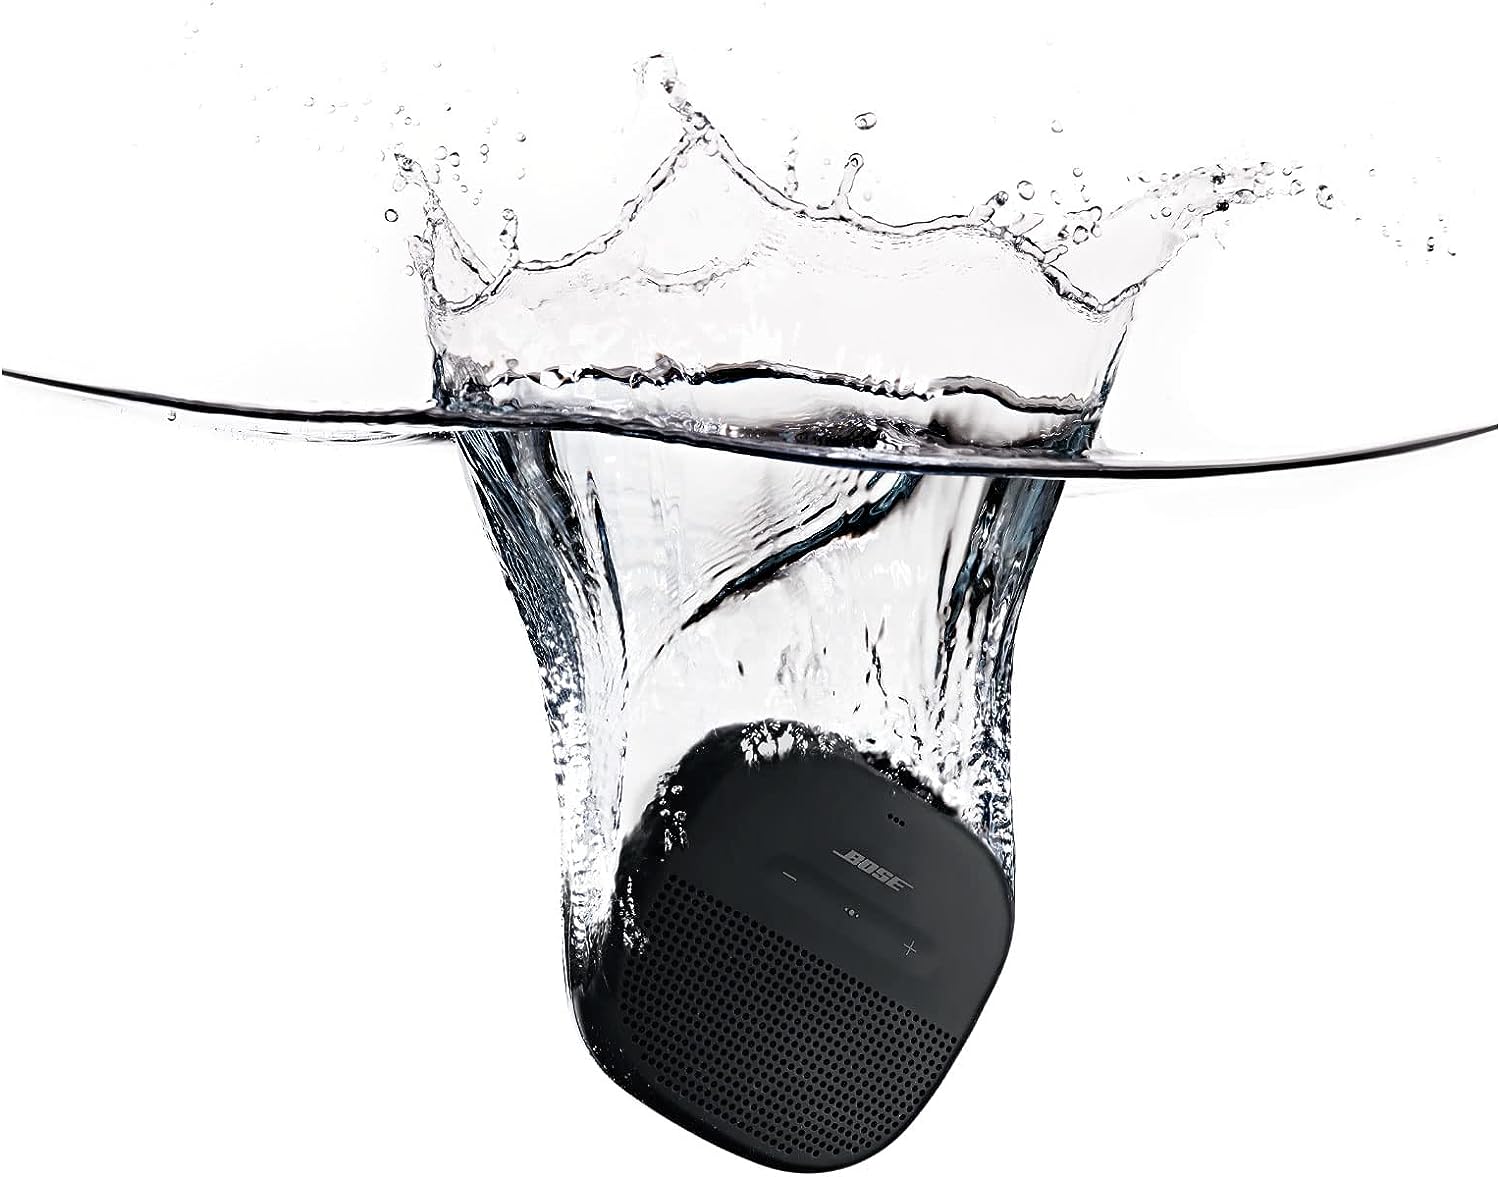 Bose SoundLink Micro Bluetooth Speaker: The Ultimate Portable Waterproof Speaker Review